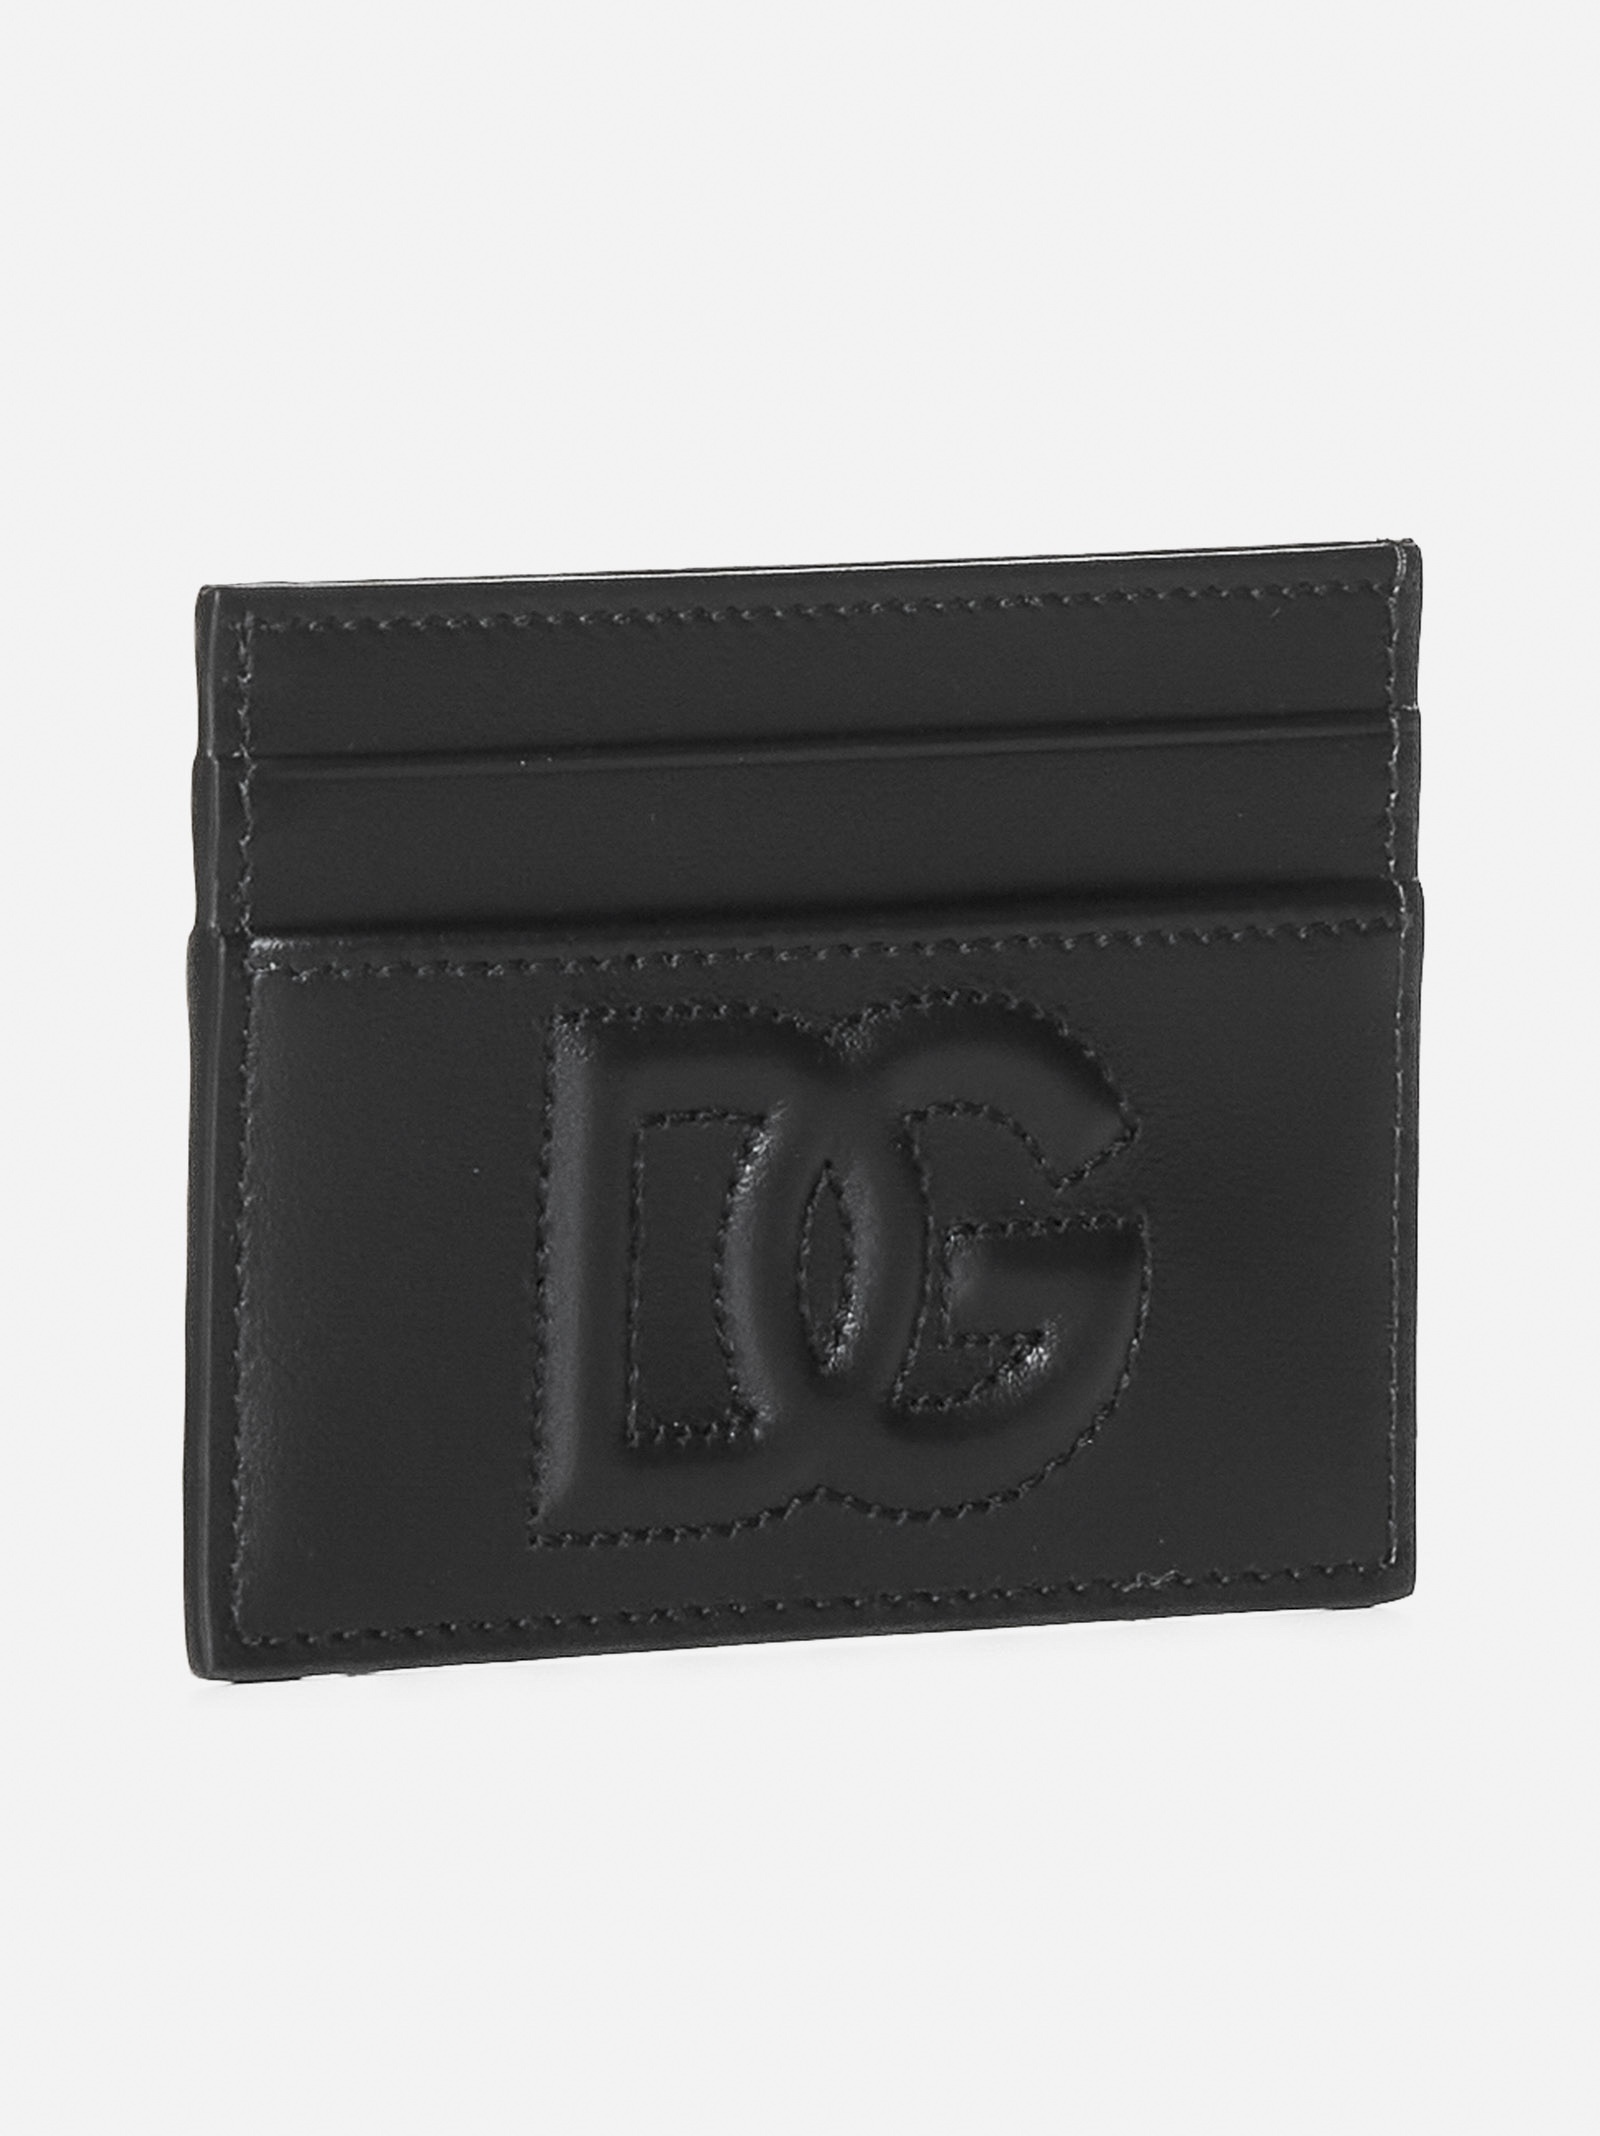 DG logo leather card holder - 3